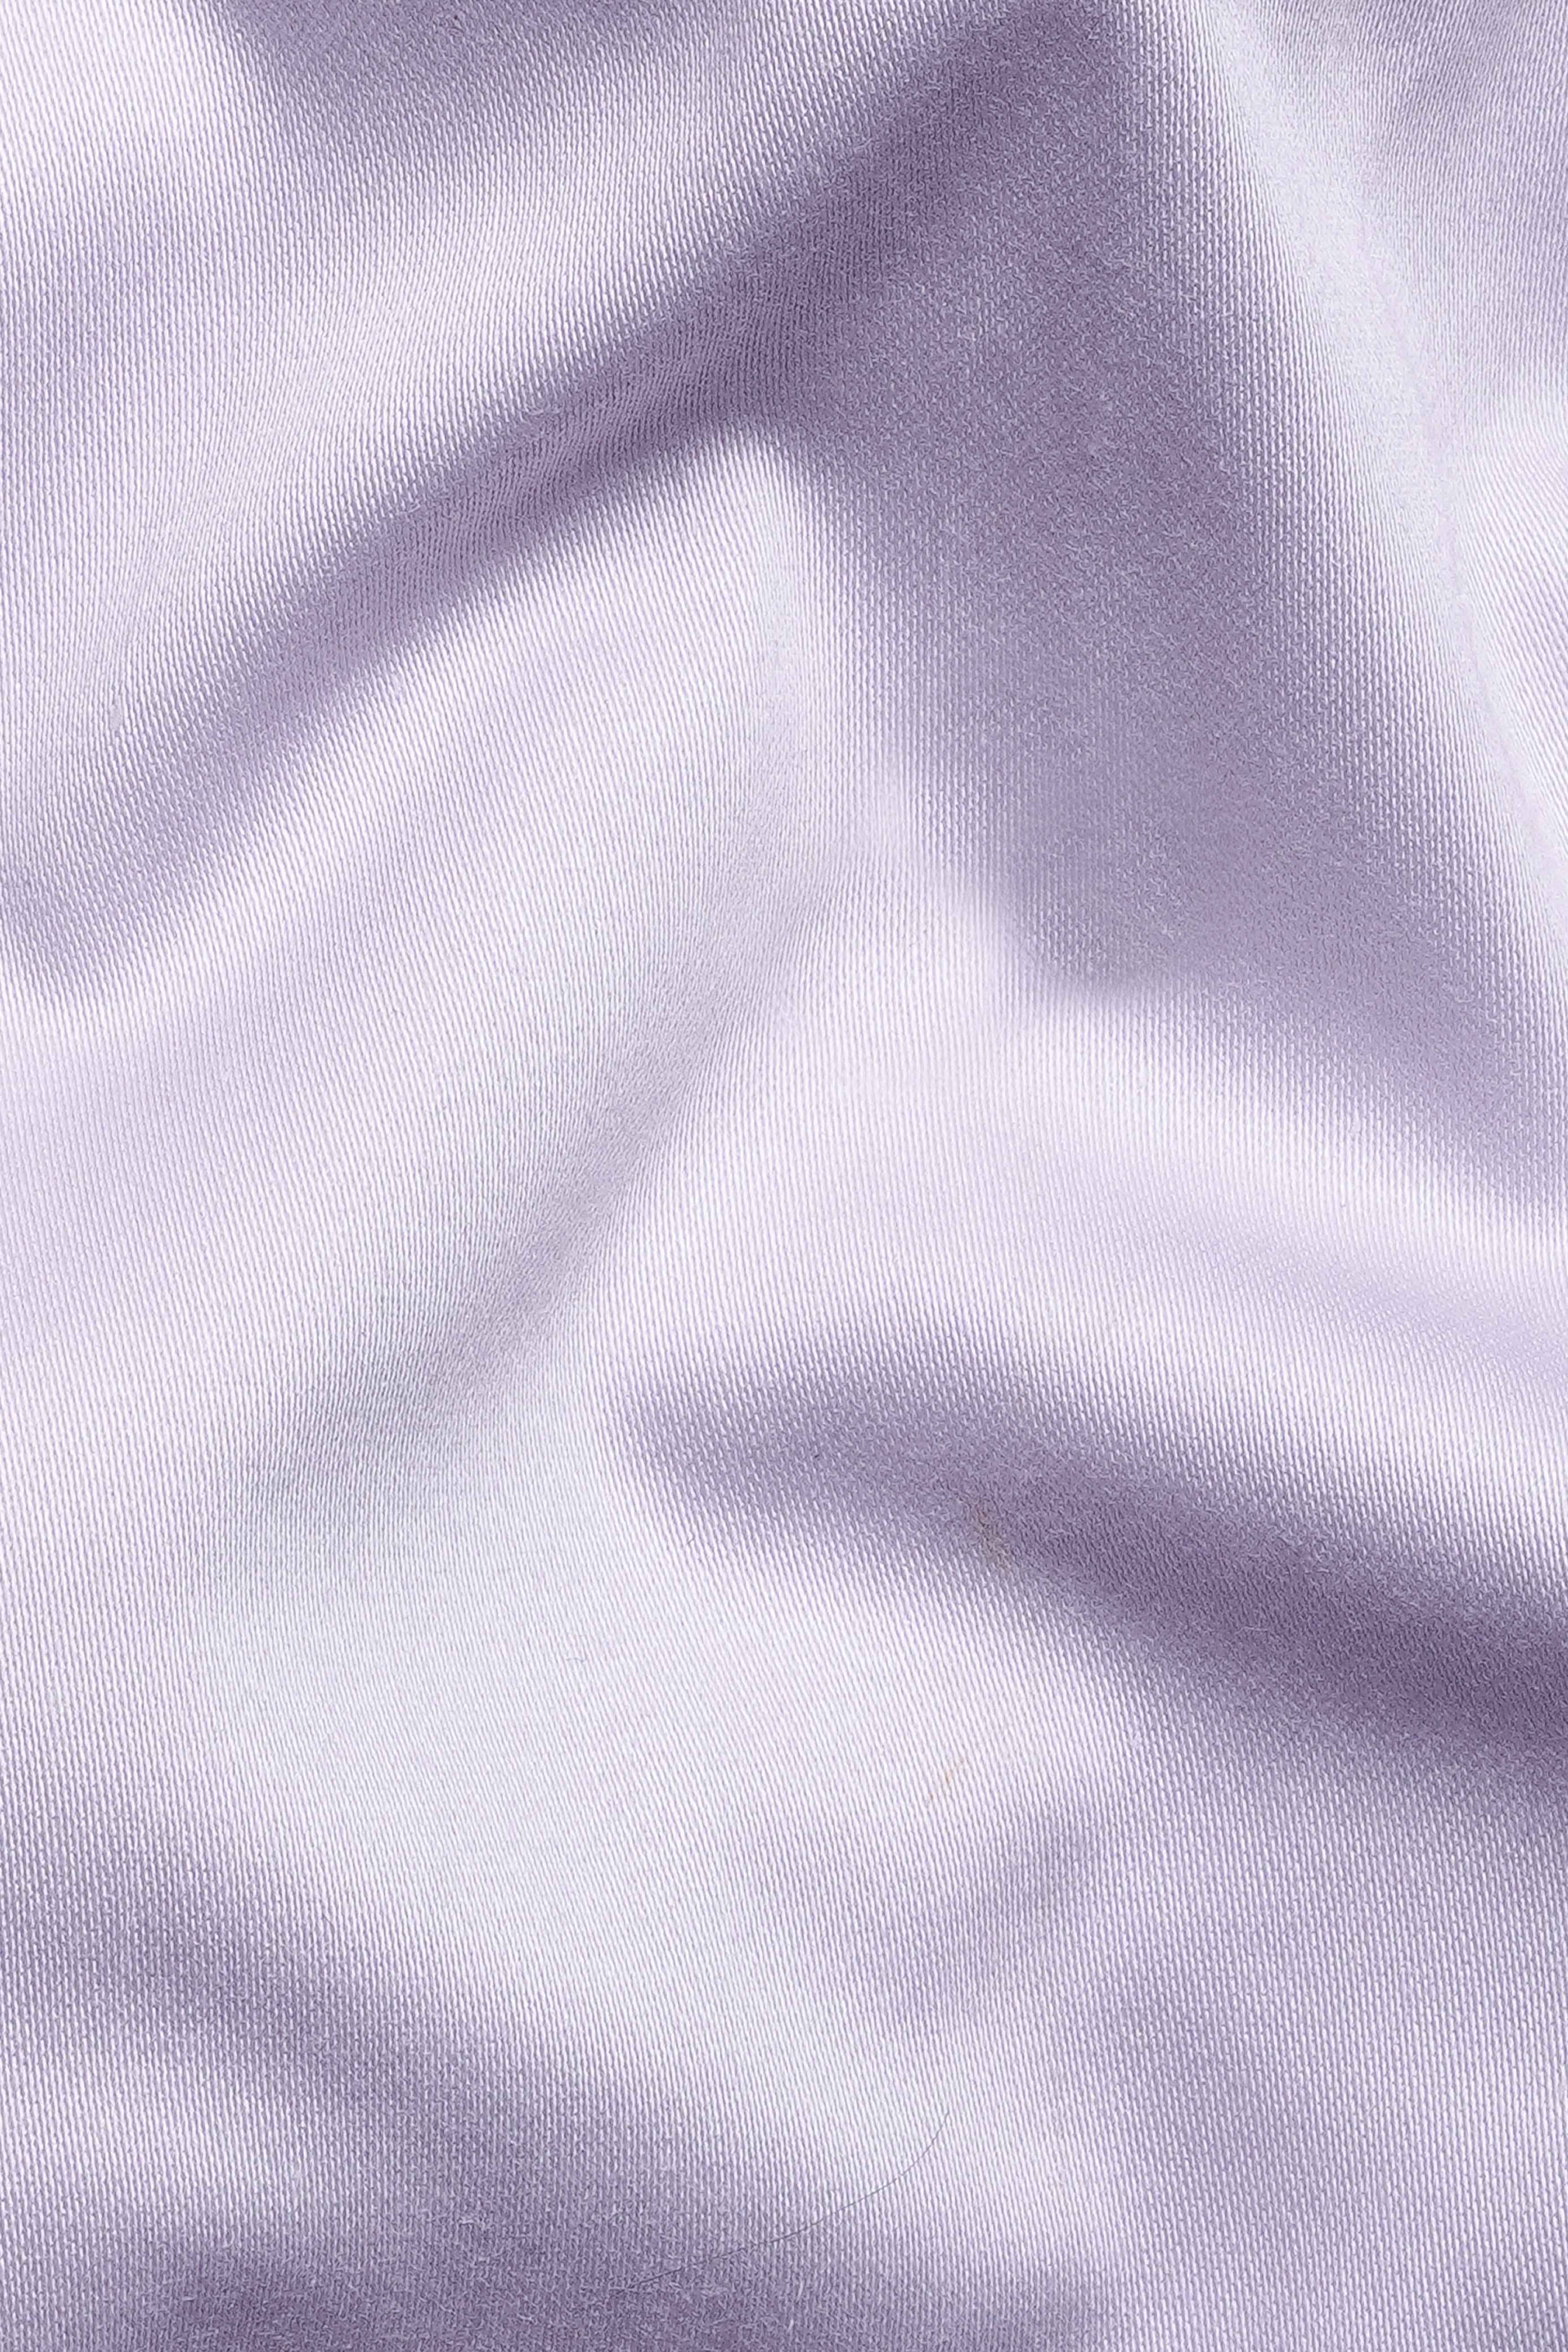 Snuff Lavender Premium Cotton Pant